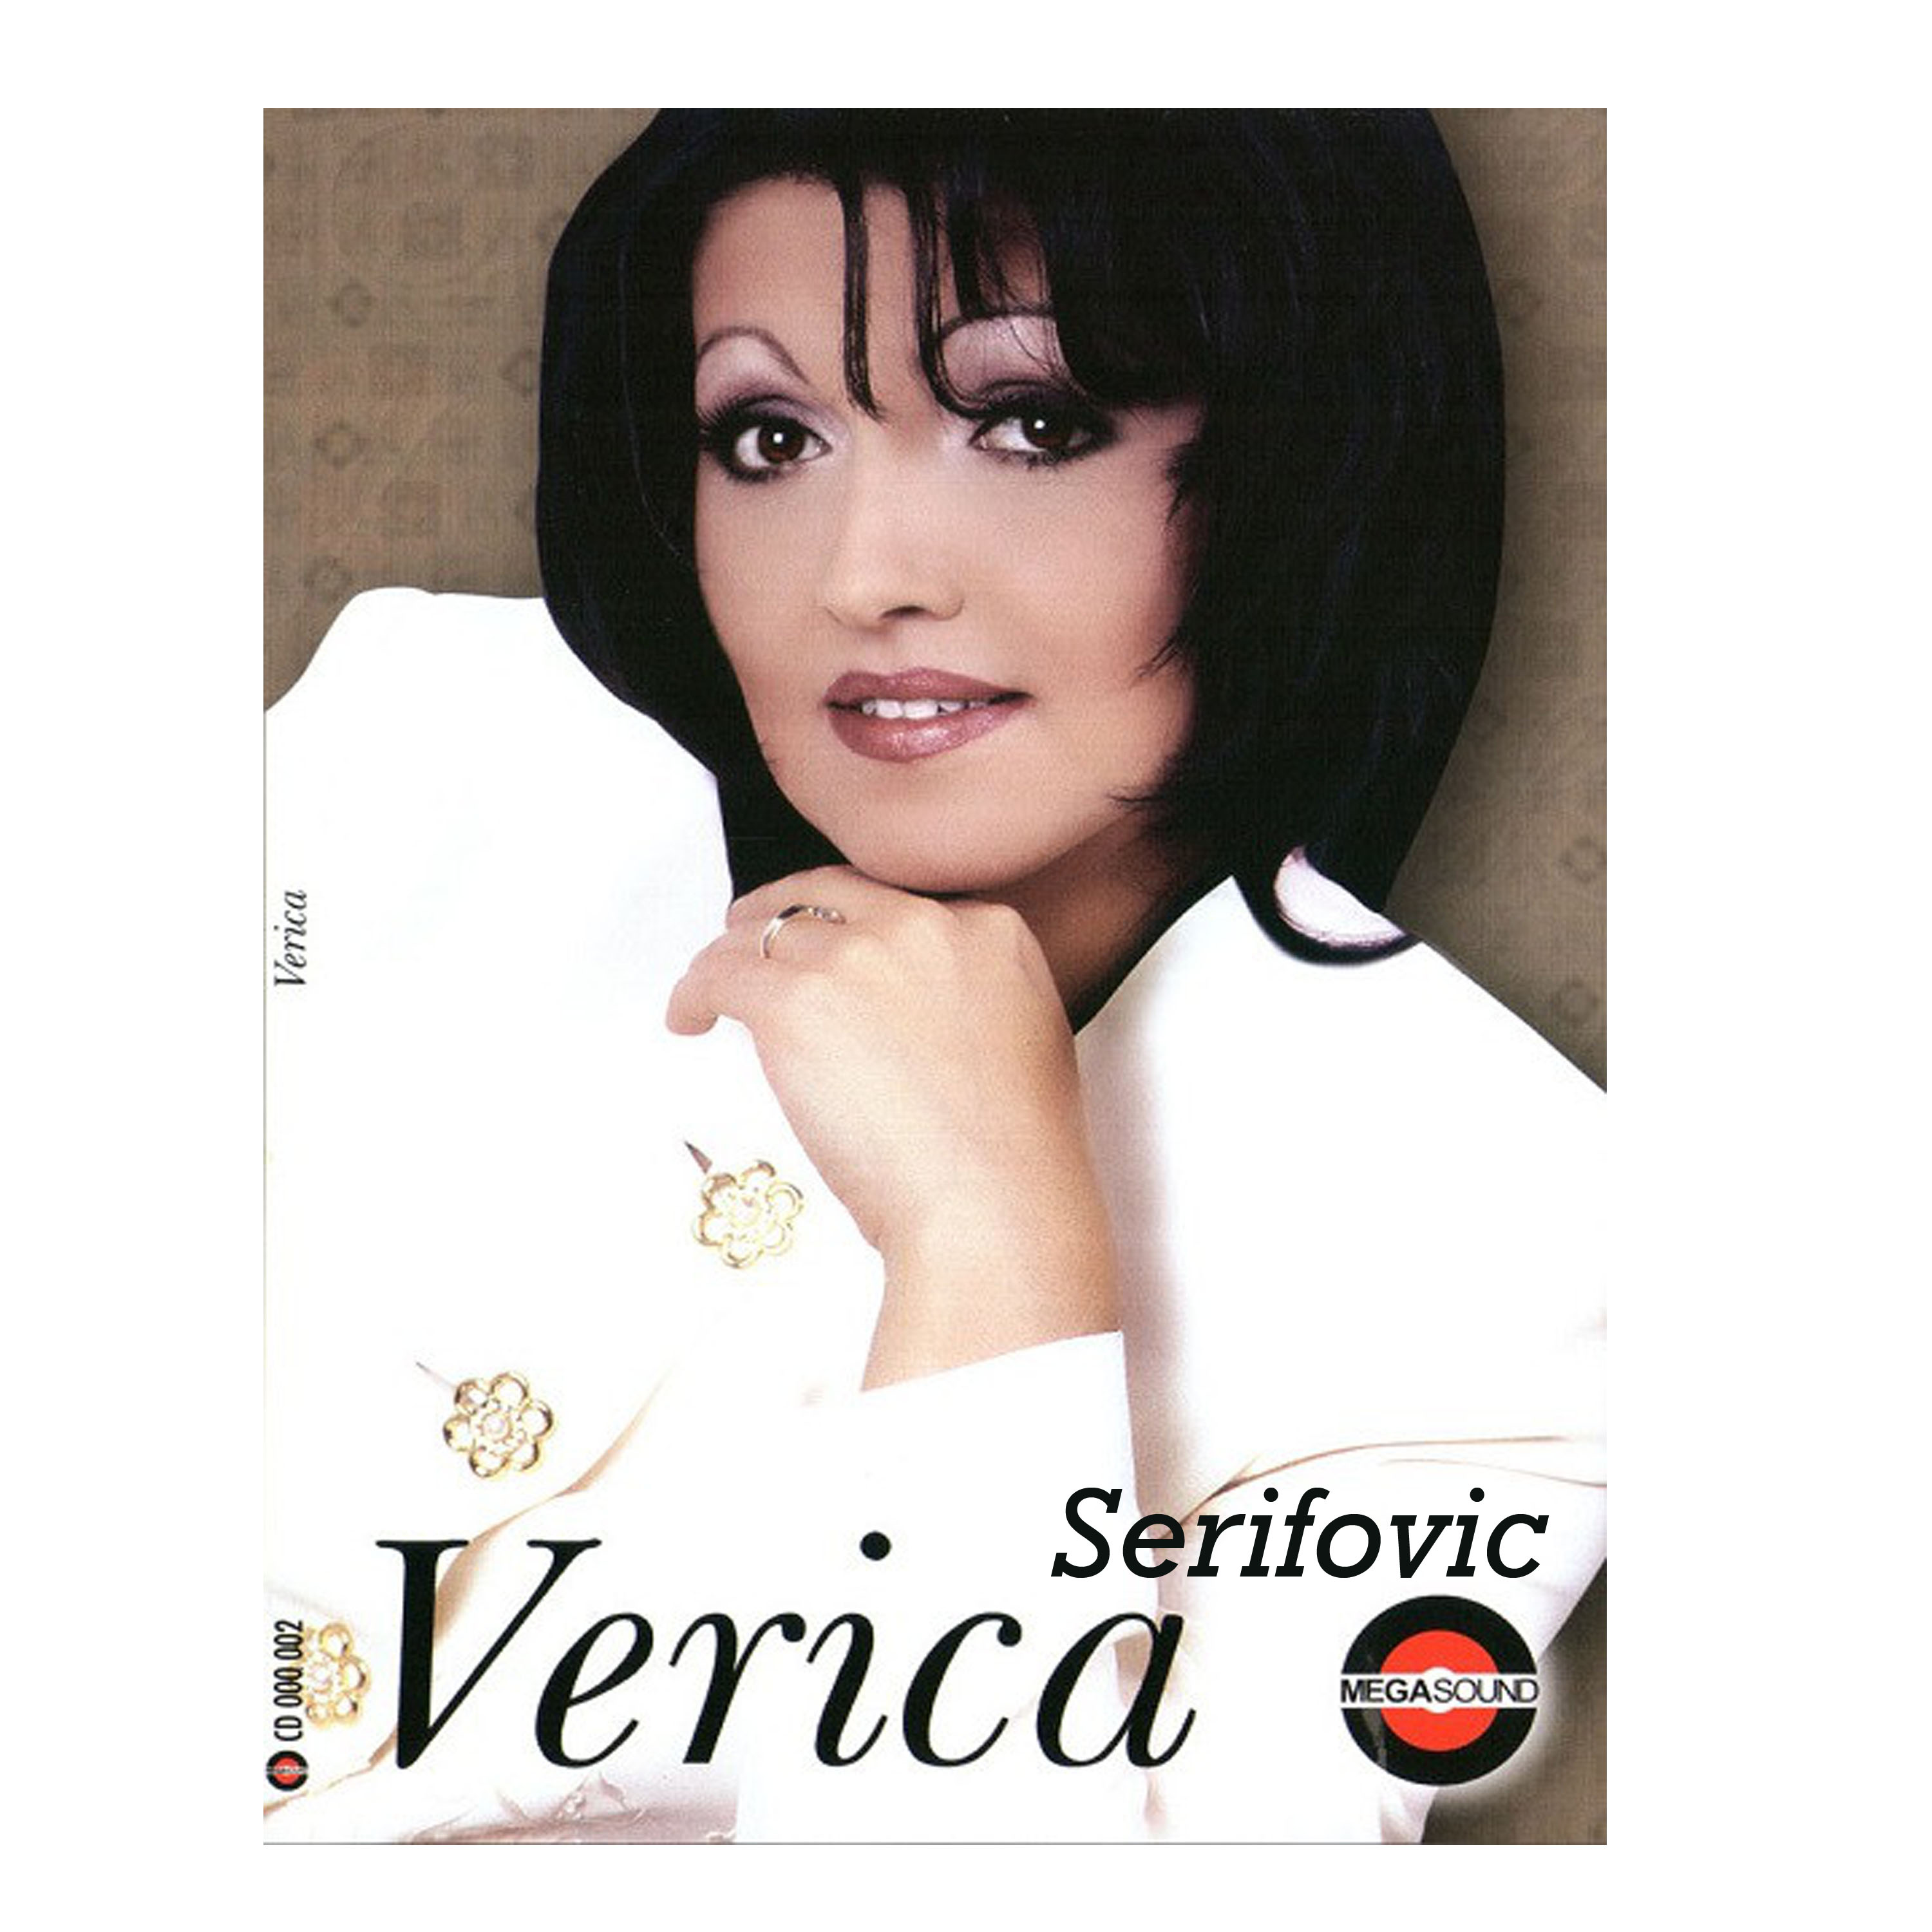 Verica Serifovic